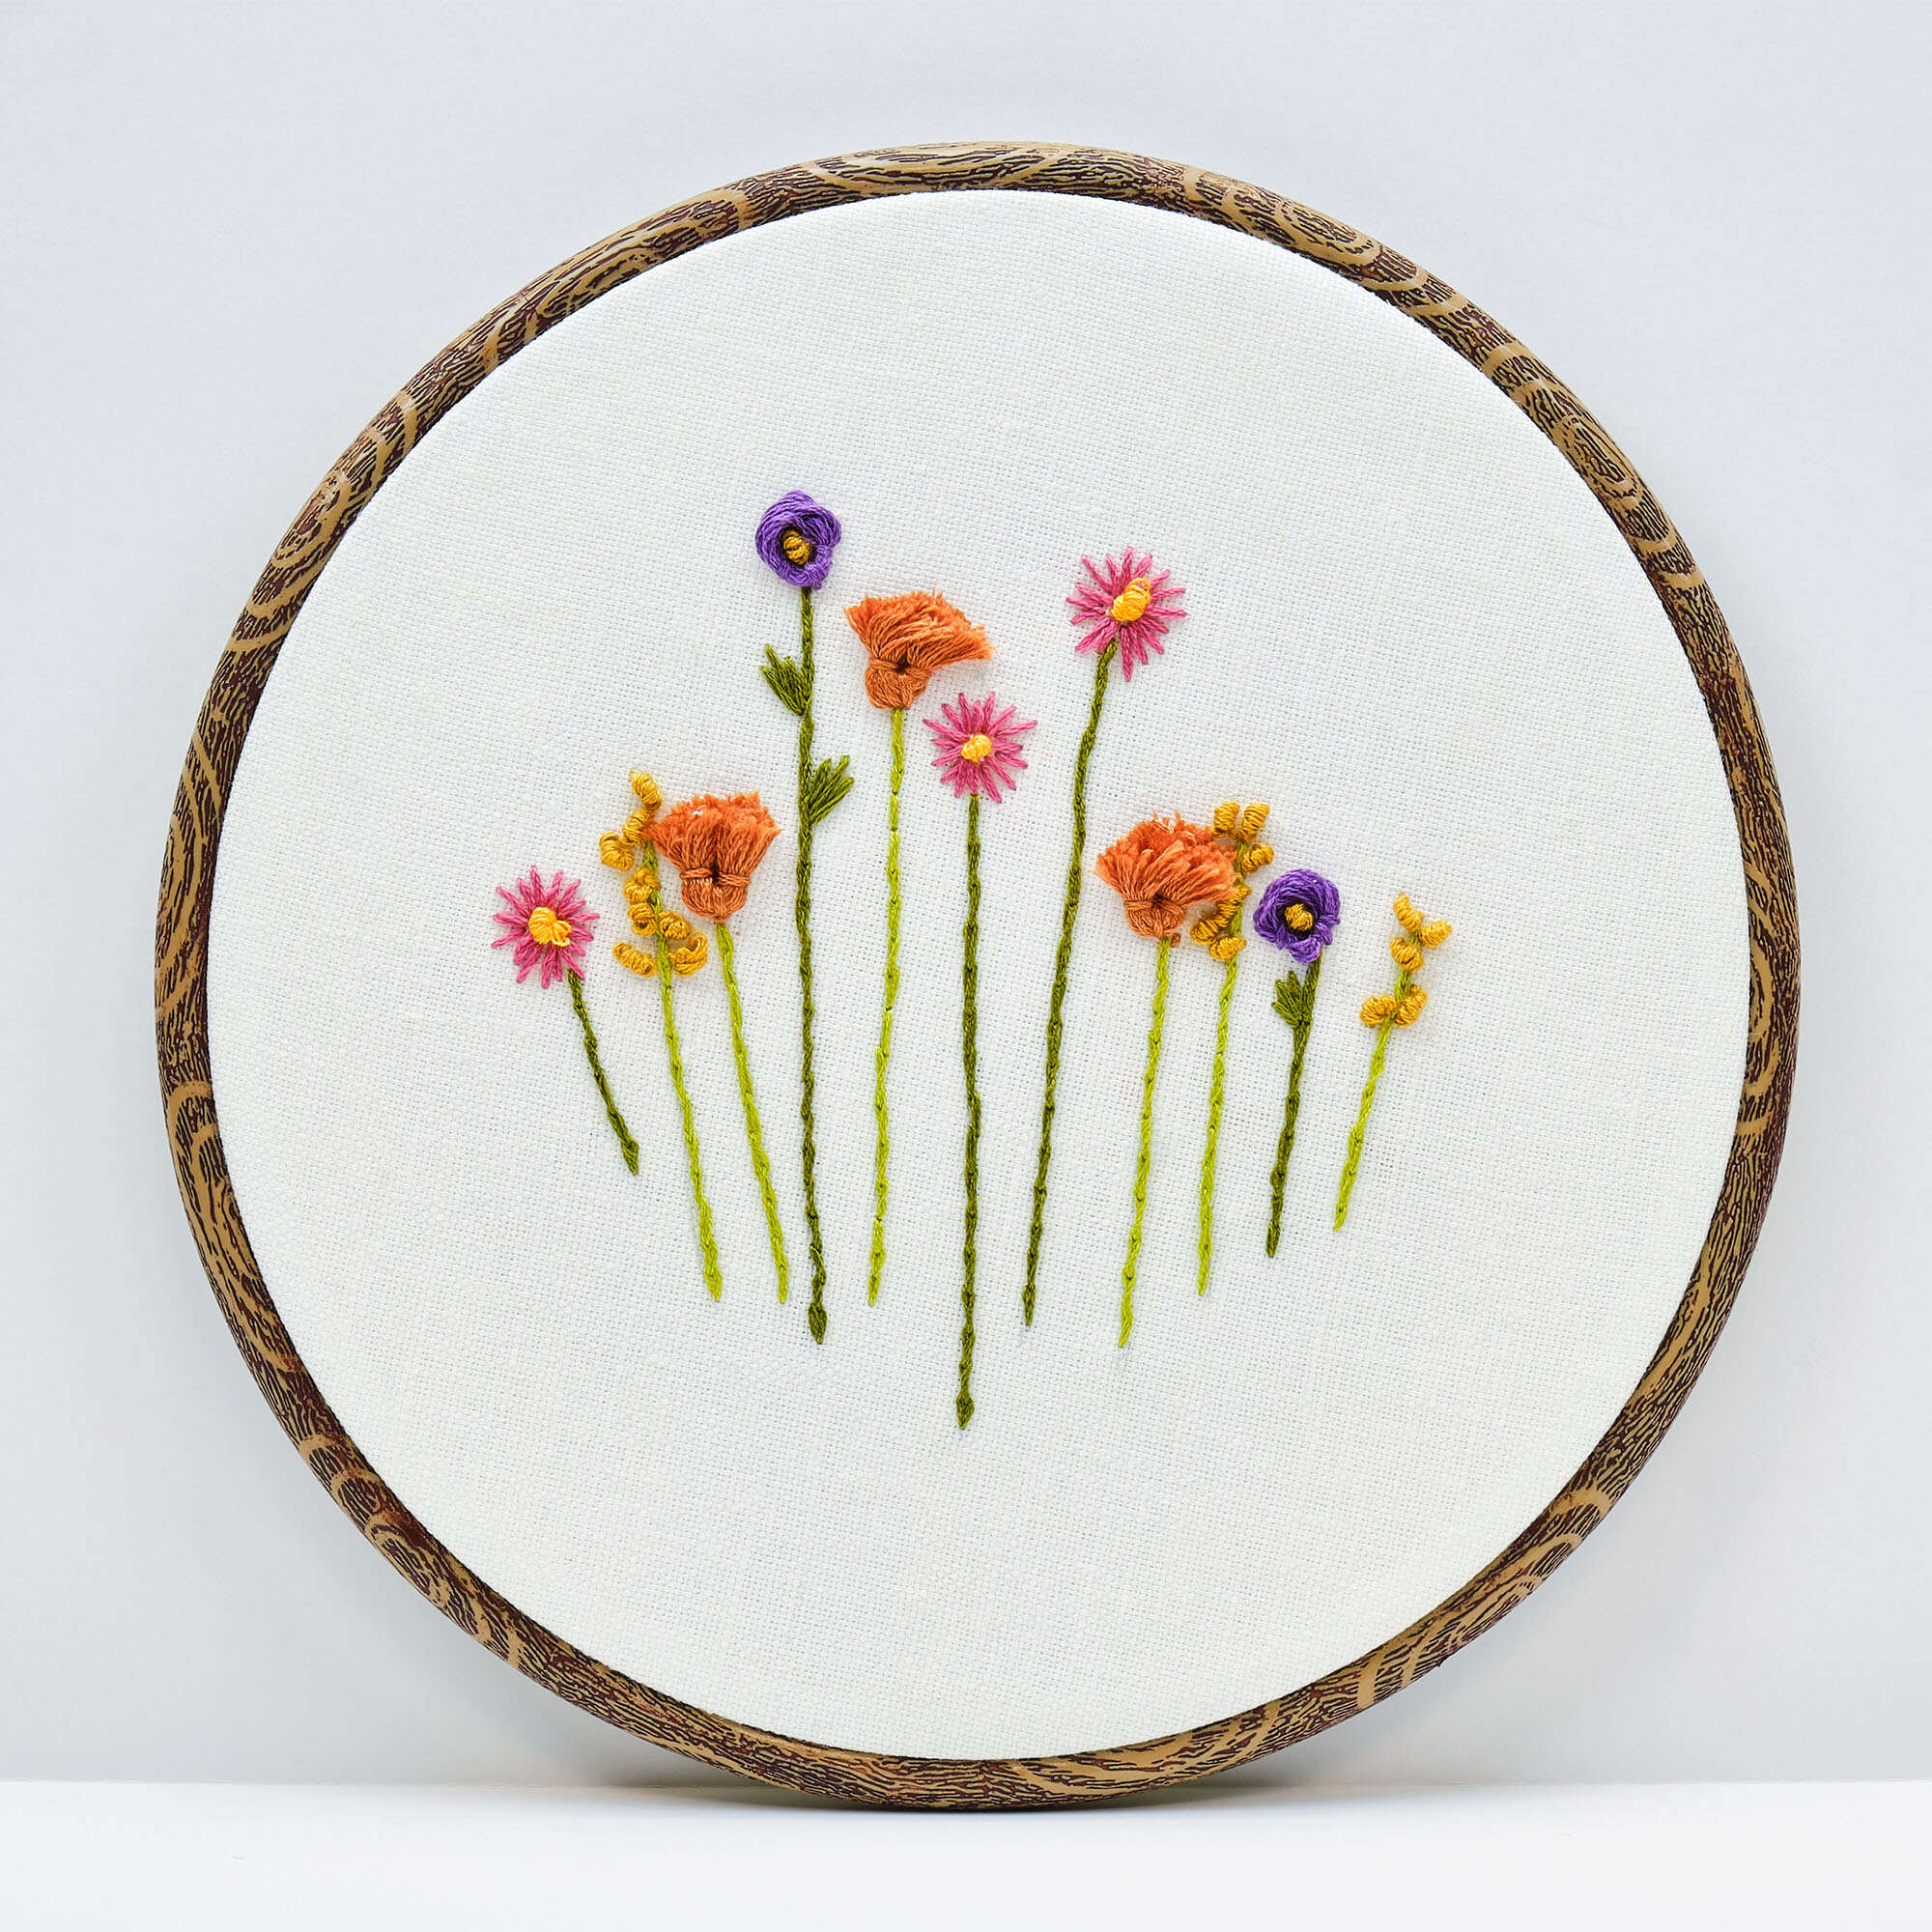 Poppy Flower Hand Embroidery Pattern Design